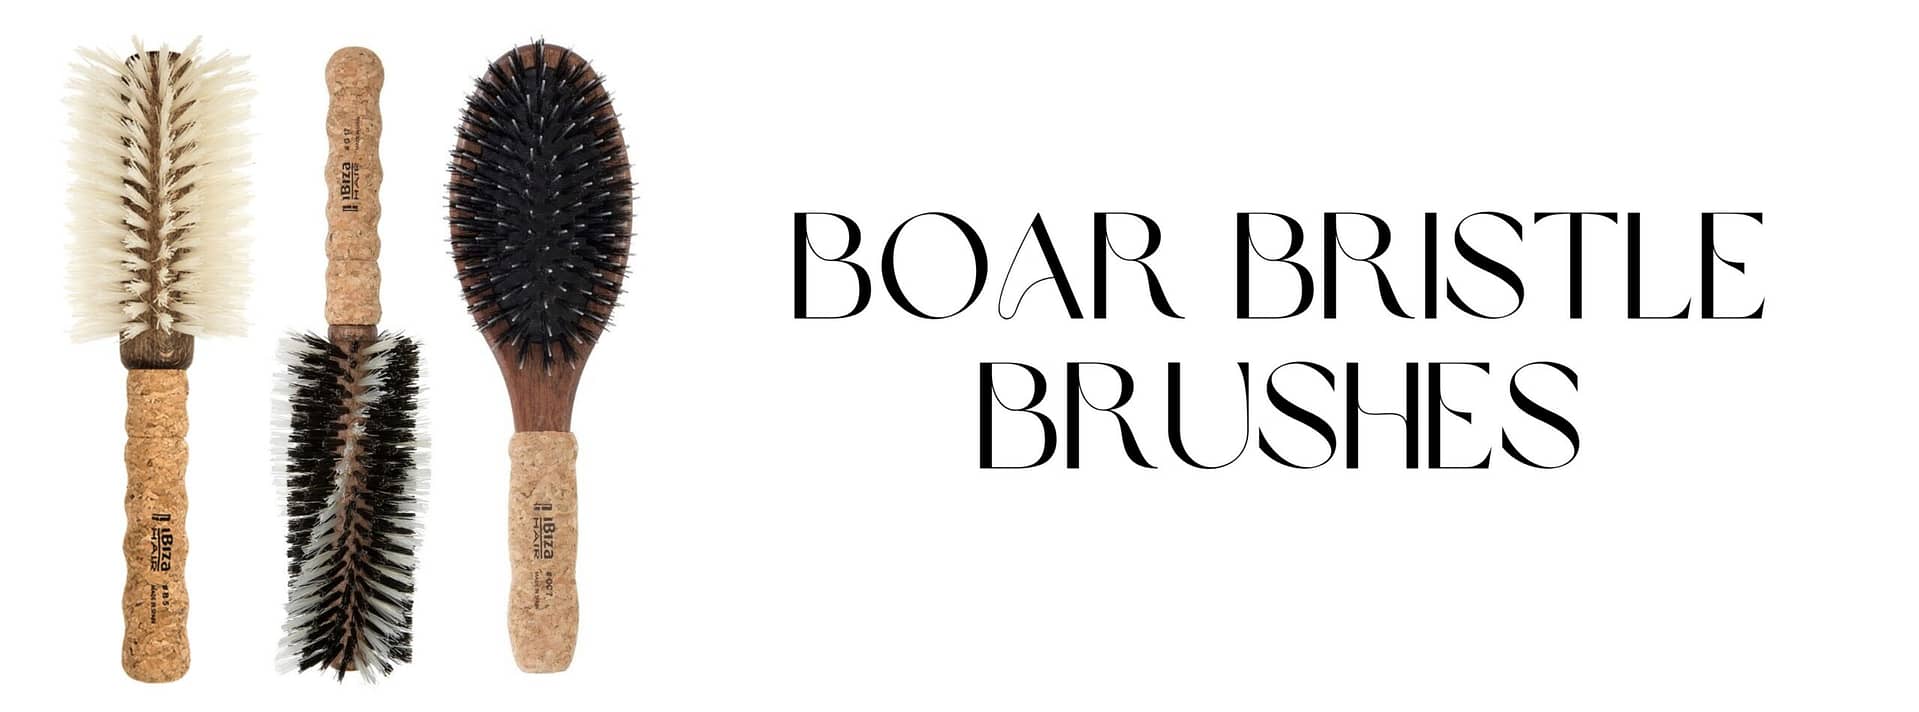 Boar Bristle Brush Australia - Best Boar Bristle Brushes